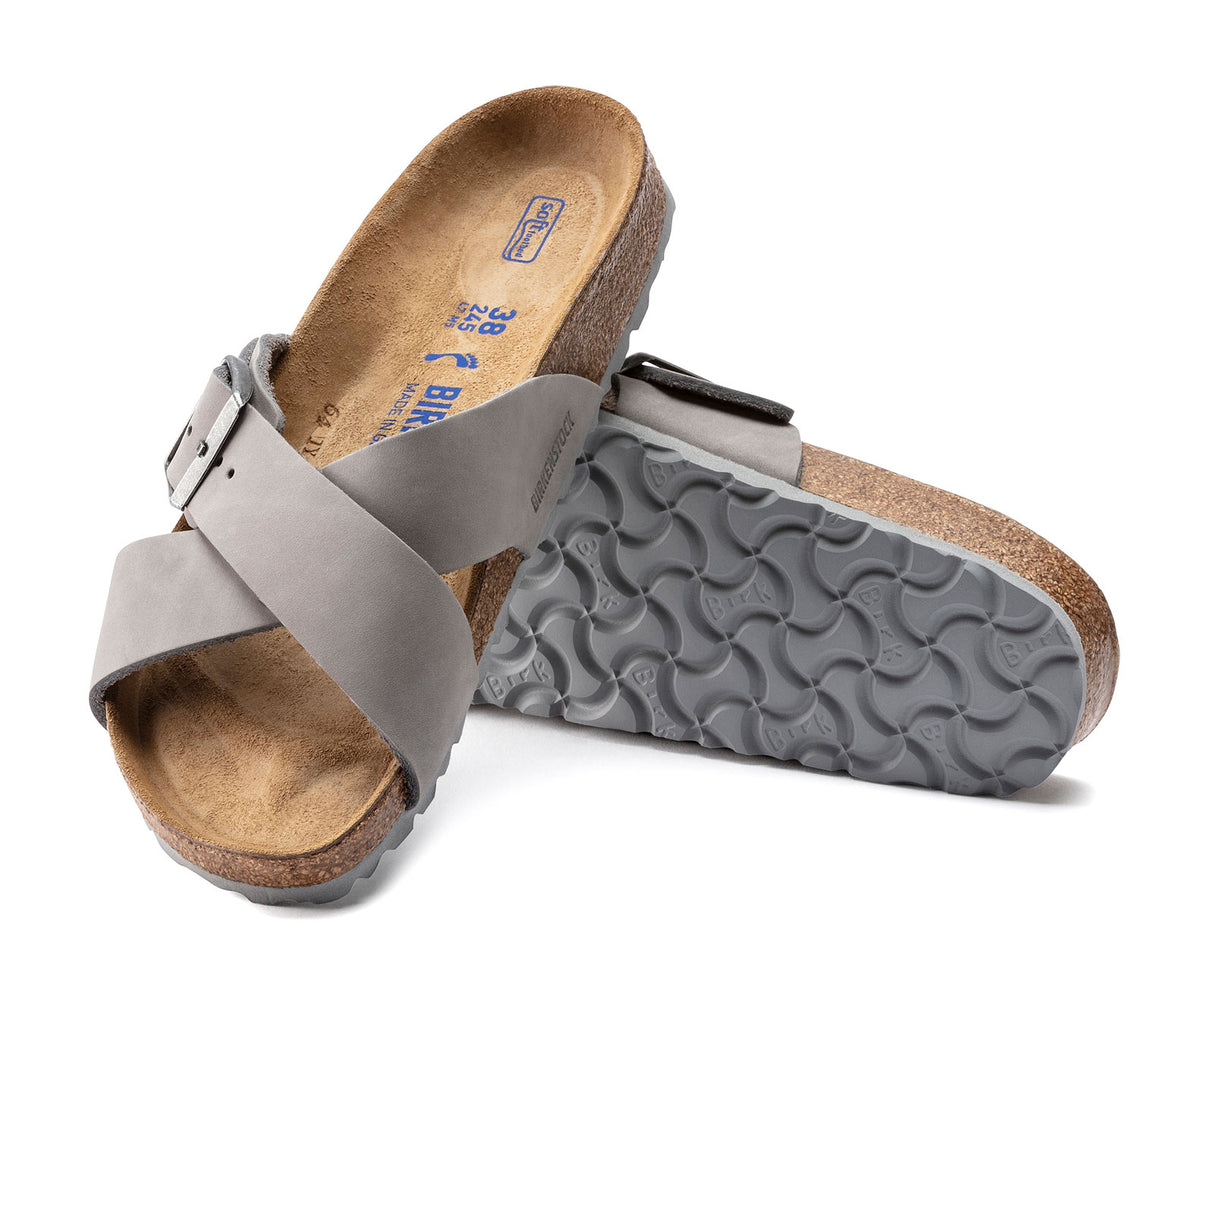 Birkenstock Siena Soft Footbed Narrow Slide Sandal (Women) - Dove Gray Sandals - Slide - The Heel Shoe Fitters